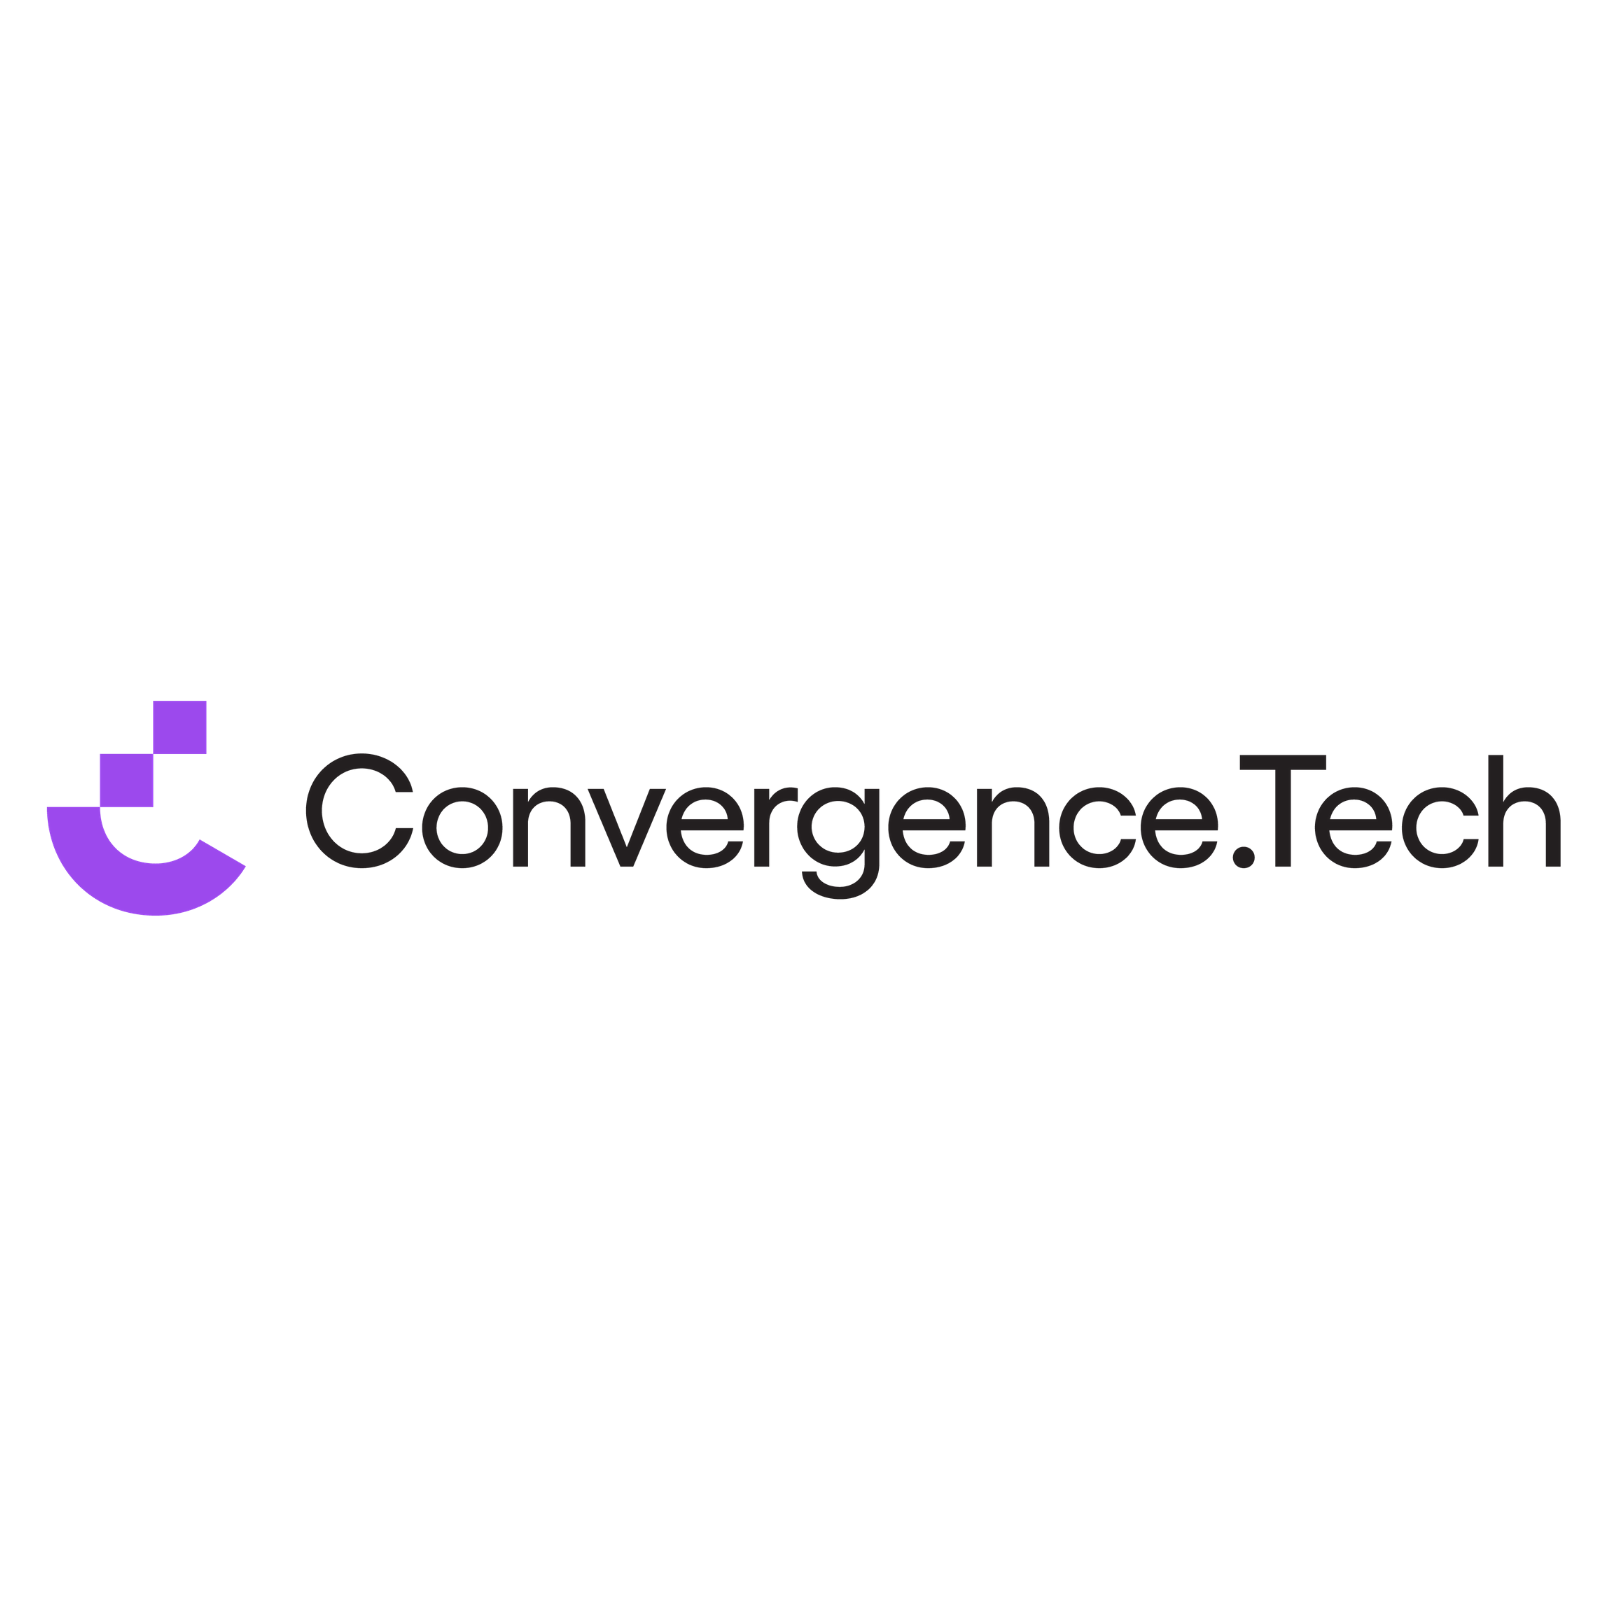 Convergence.Tech The Change Leadership Sponsor & Partner